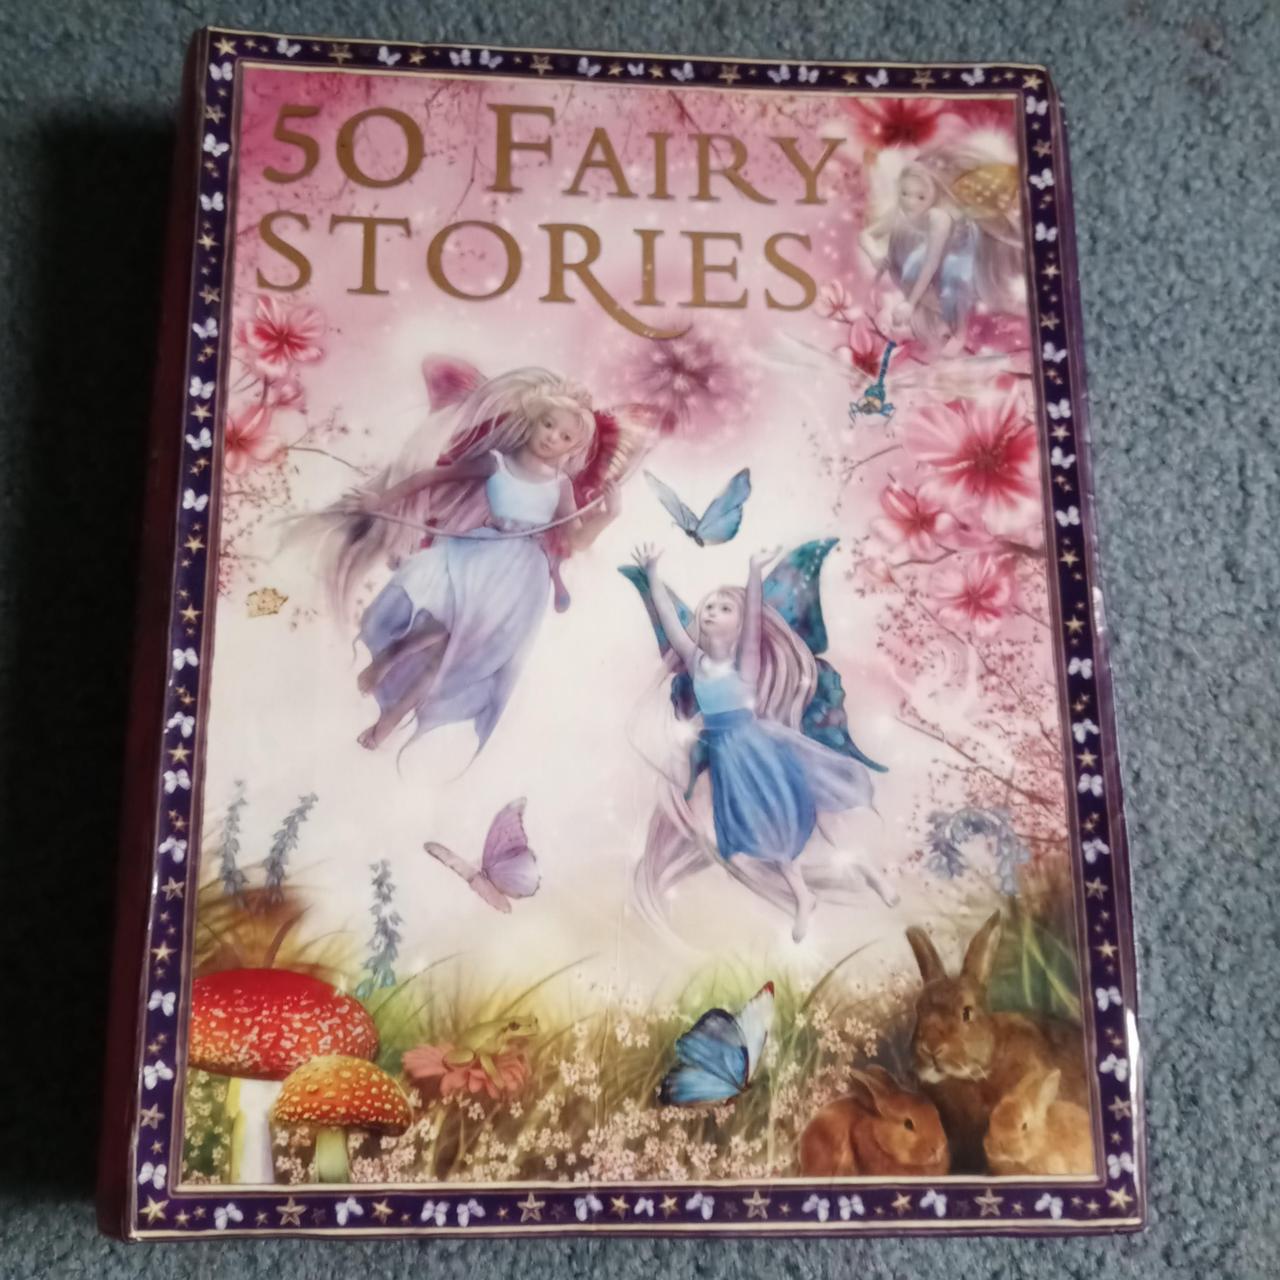 50 Fairy Stories - multiple authors #fairies... - Depop